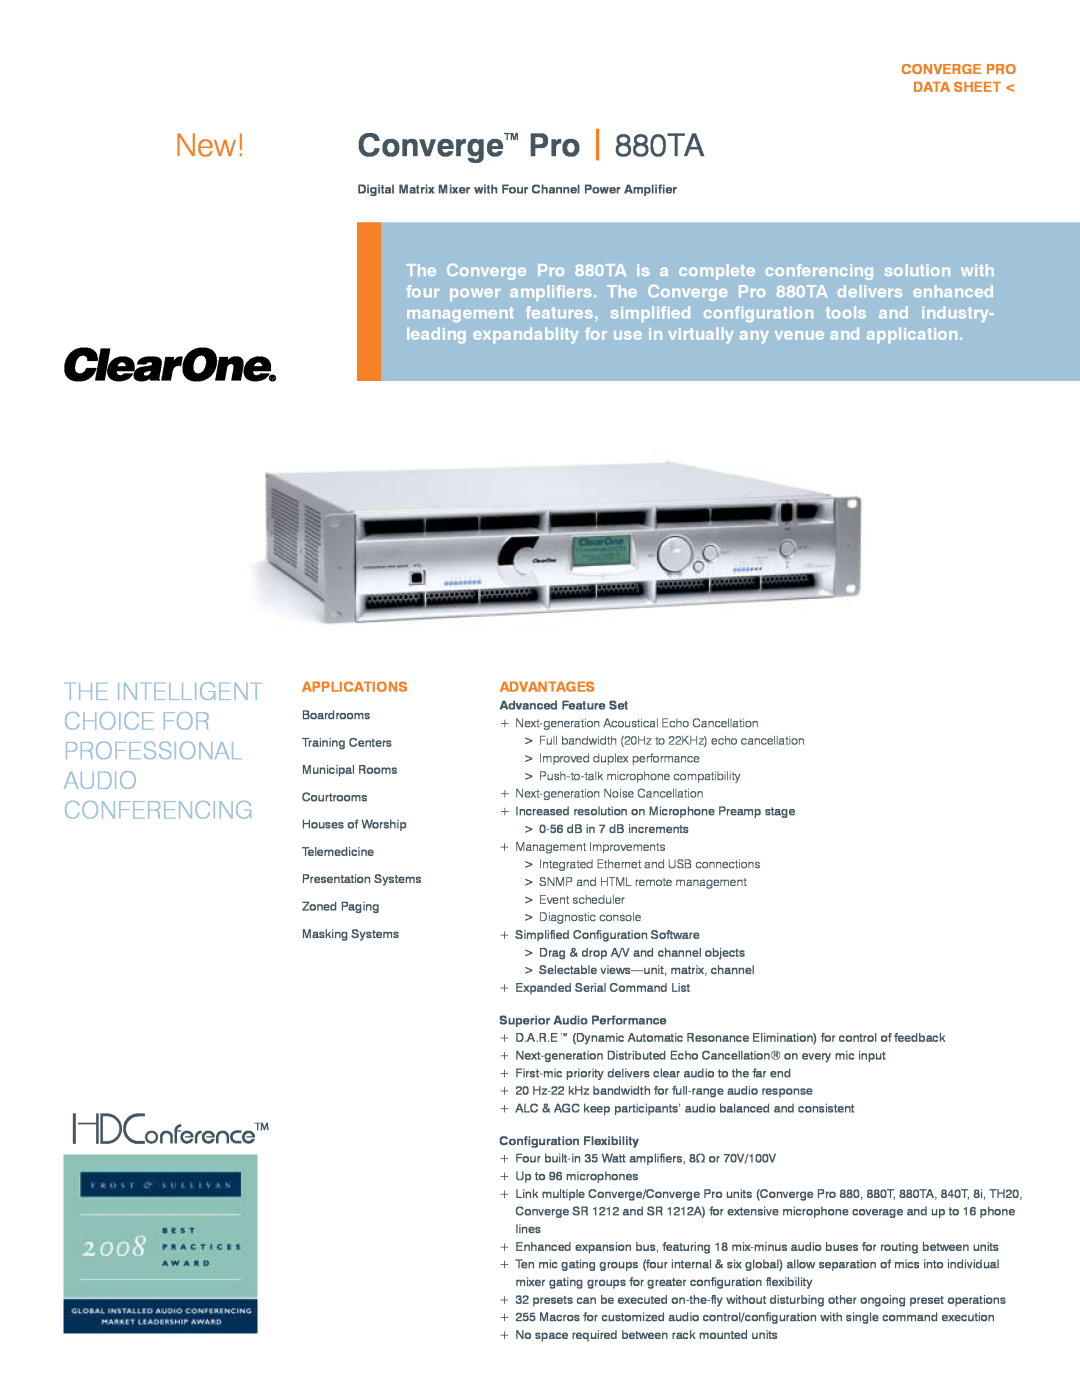 ClearOne comm manual ConvergeTM Pro 880TA 